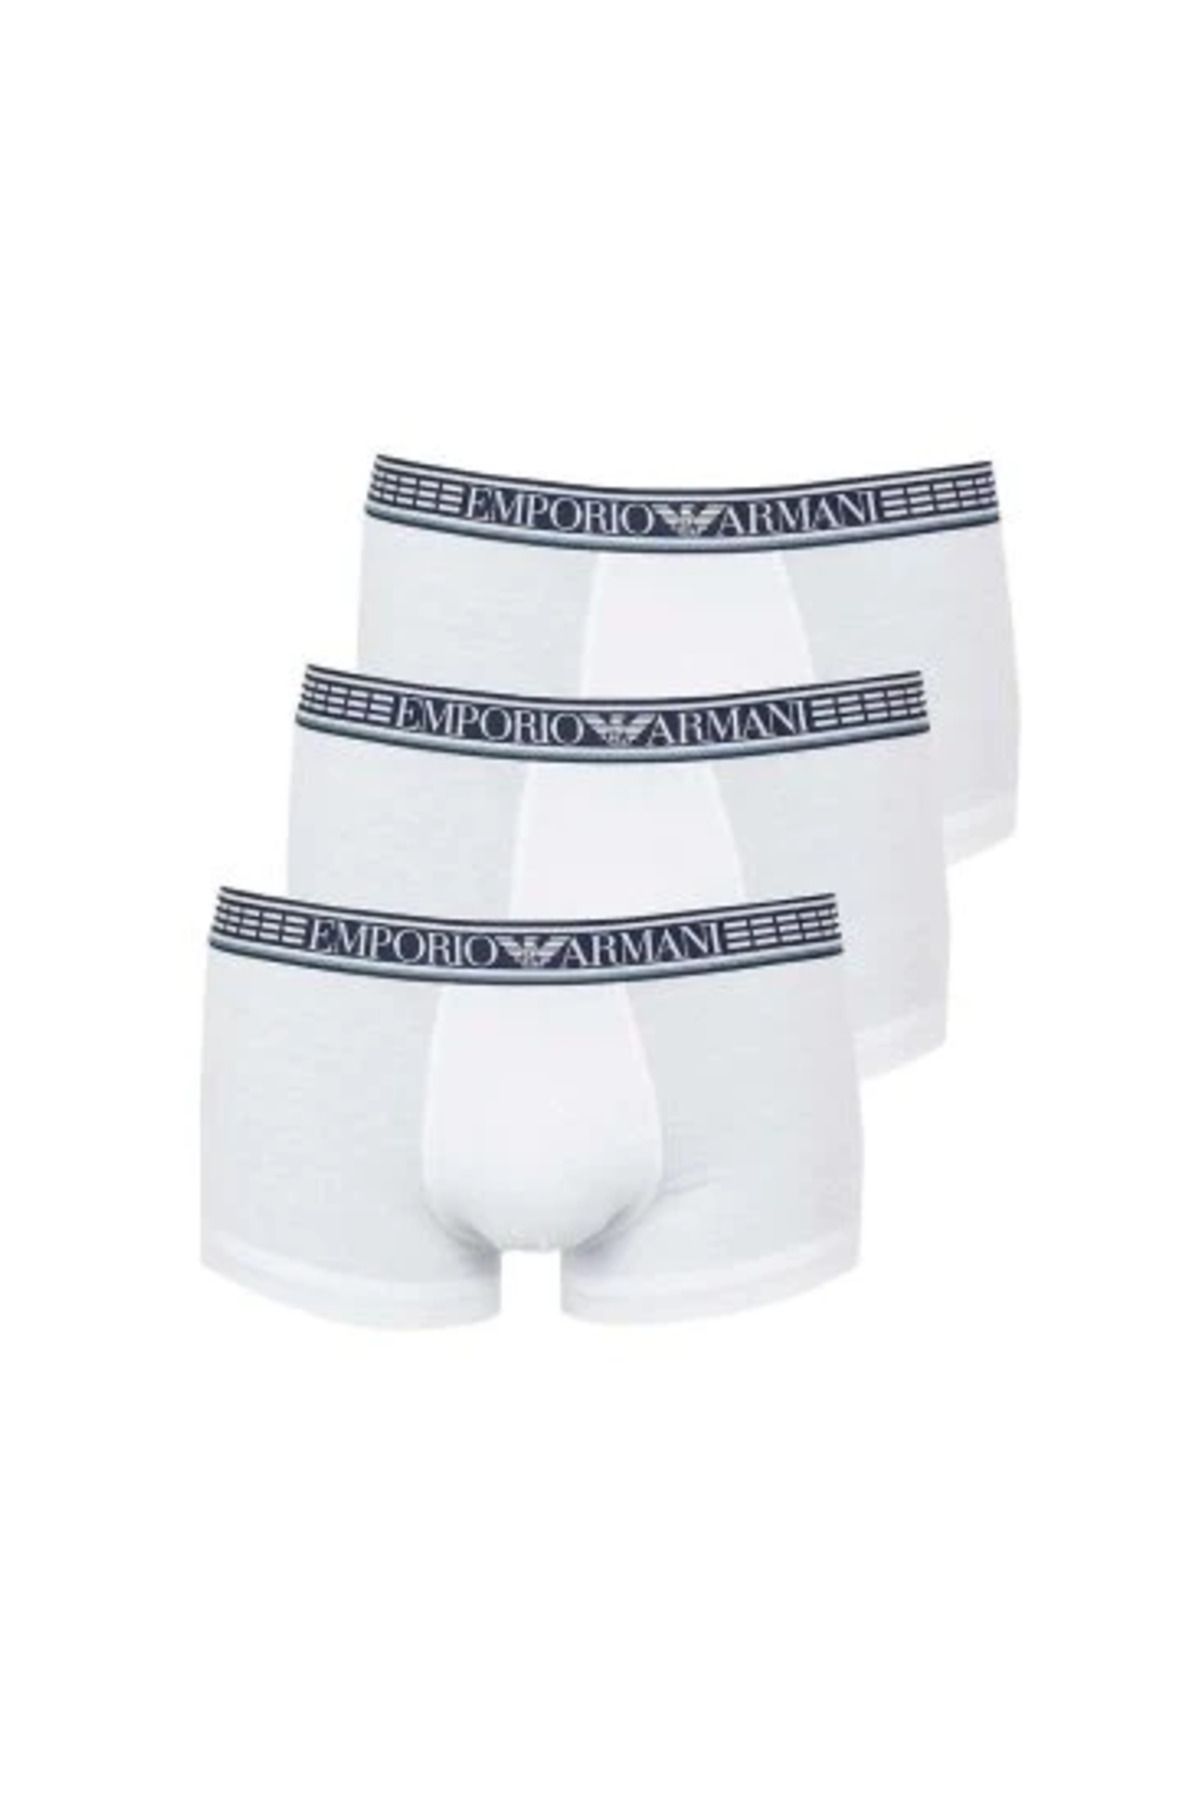 Emporio Armani Erkek Marka Logolu Beli Lastikli Beyaz Boxer 111473 1A728-BEY